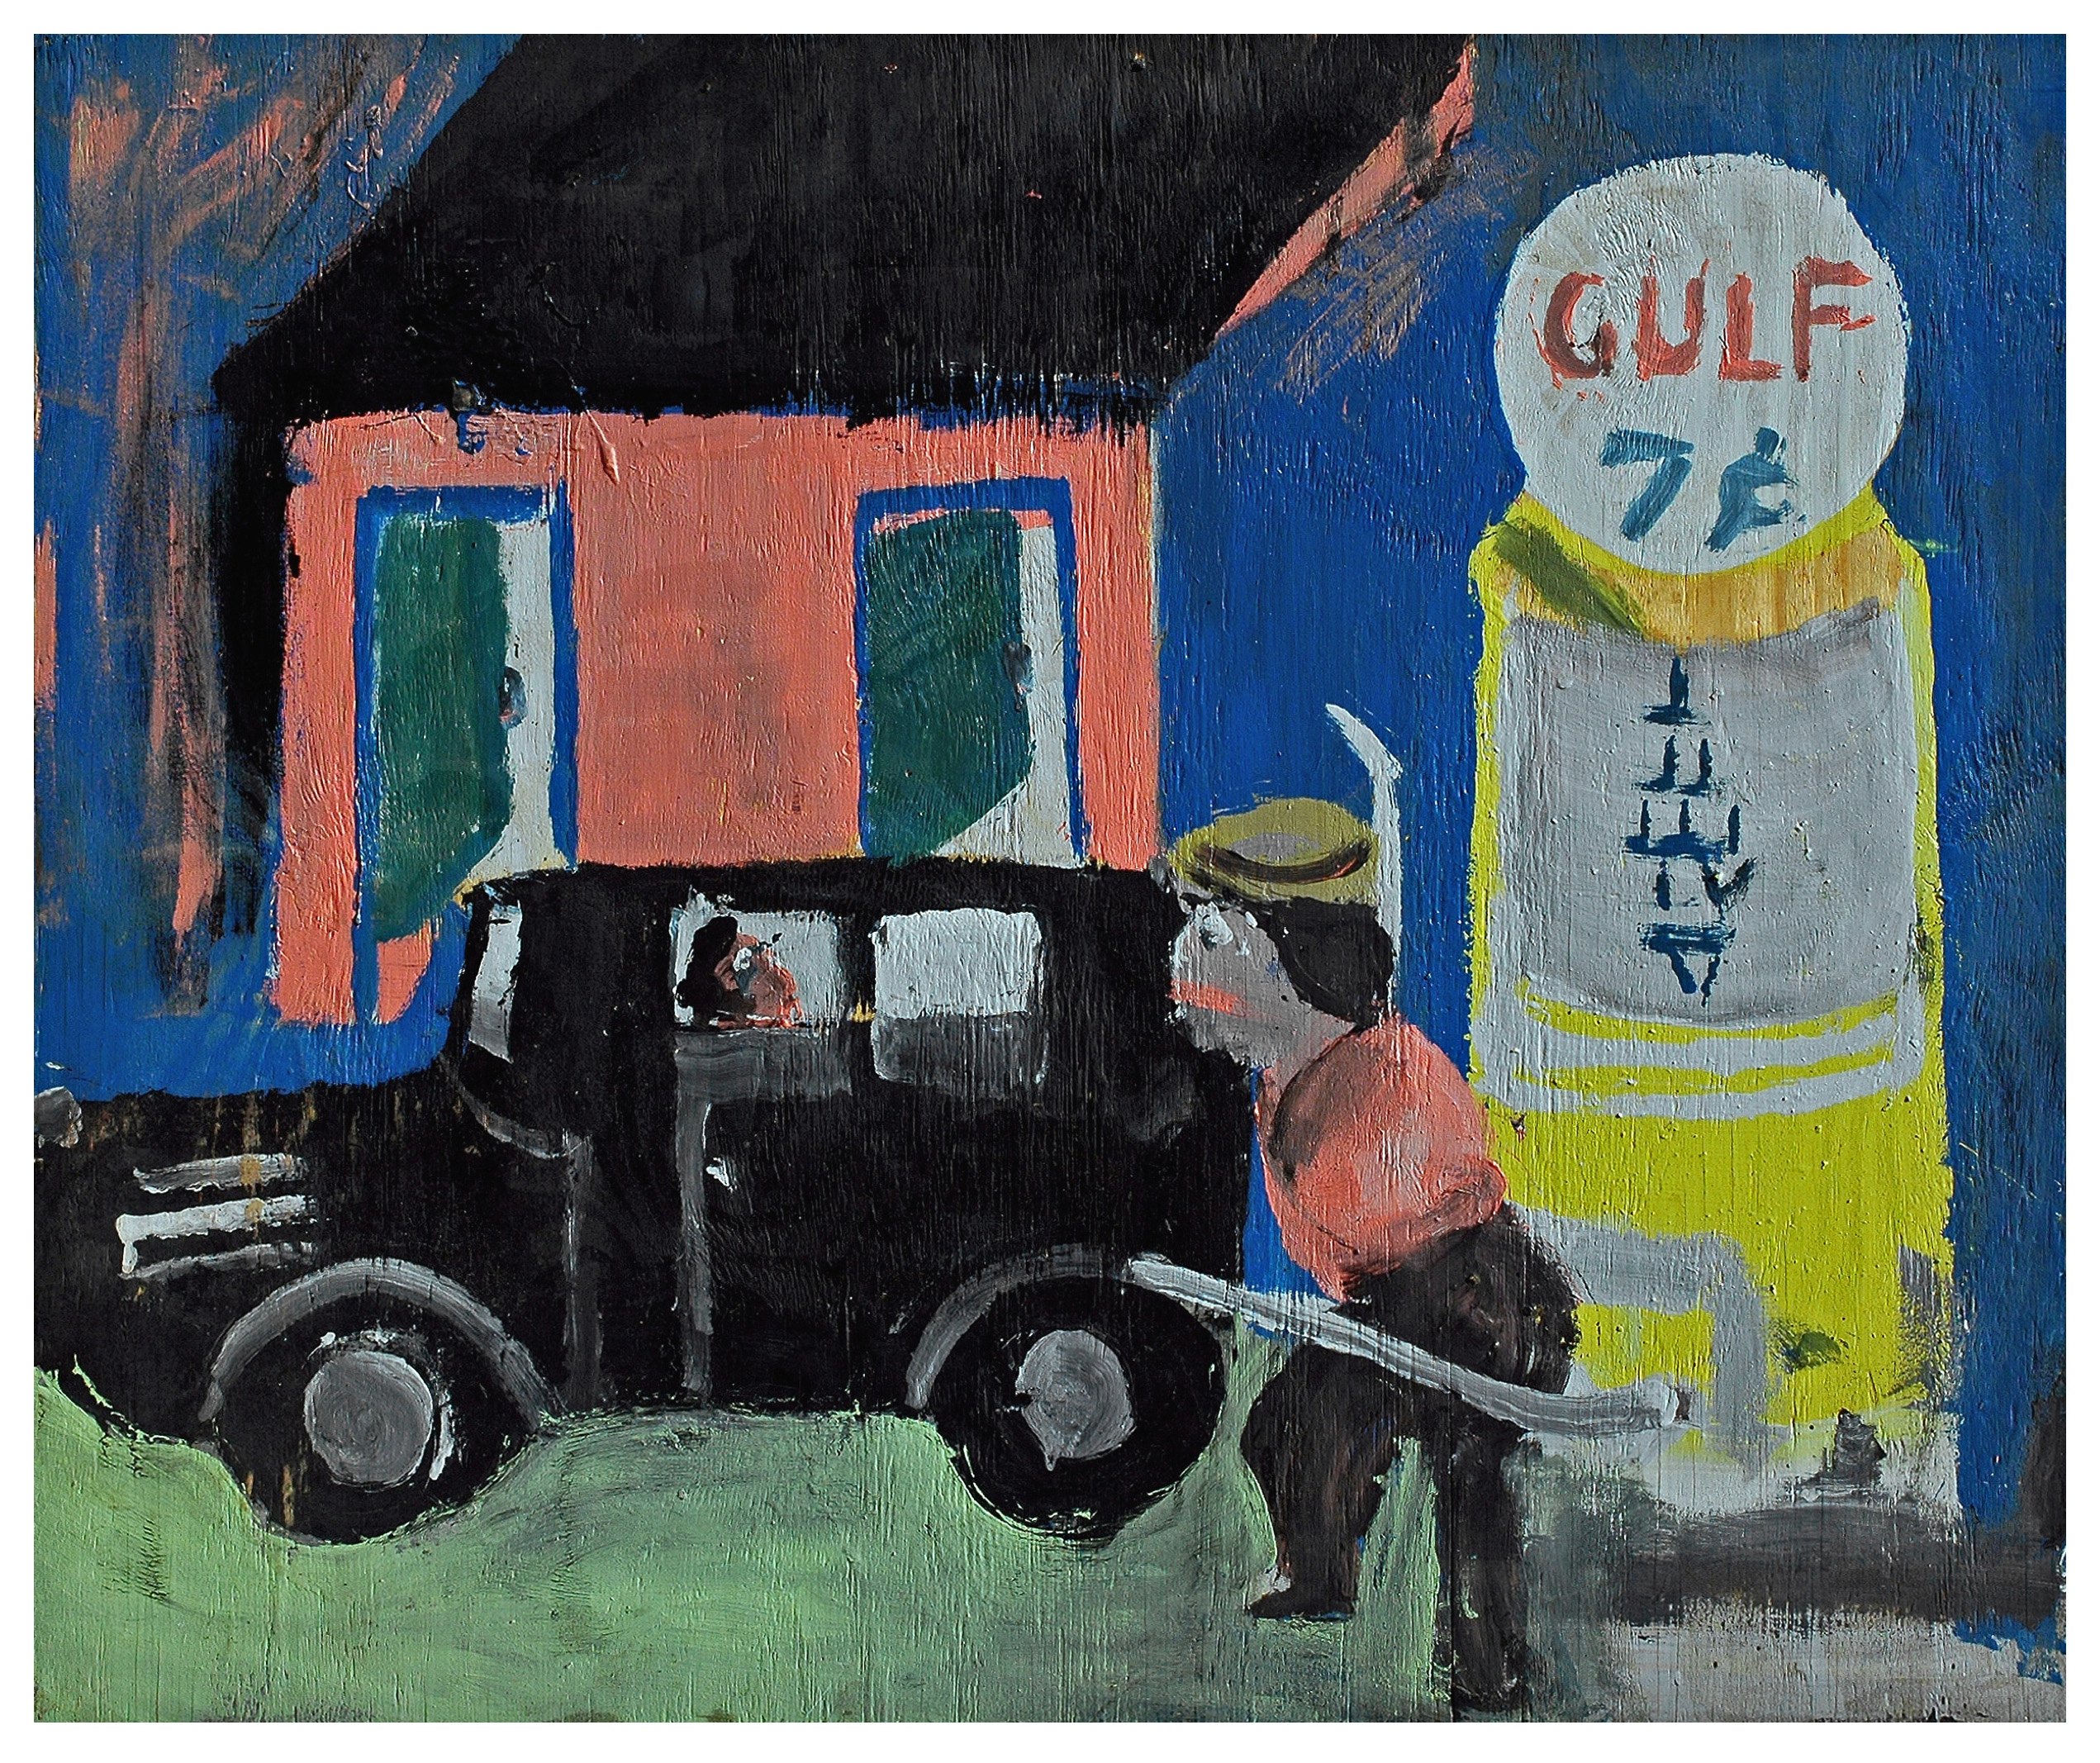 Sam Doyle, Gulf 7¢, 1982–85, Gordon W. Bailey Collection